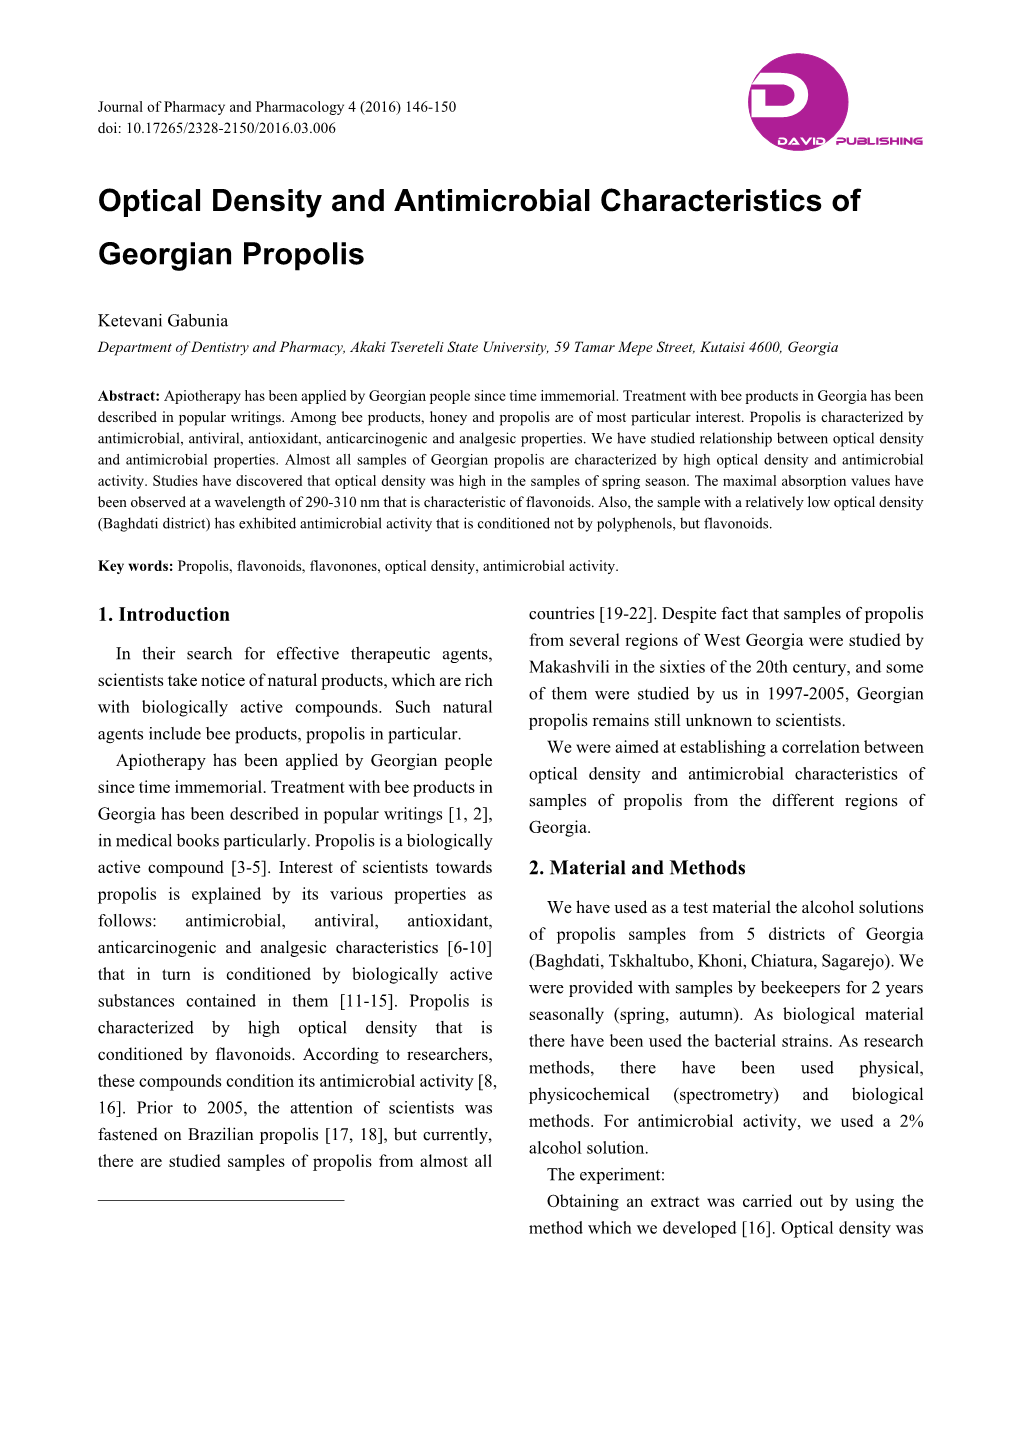 Optical Density and Antimicrobial Characteristics of Georgian Propolis